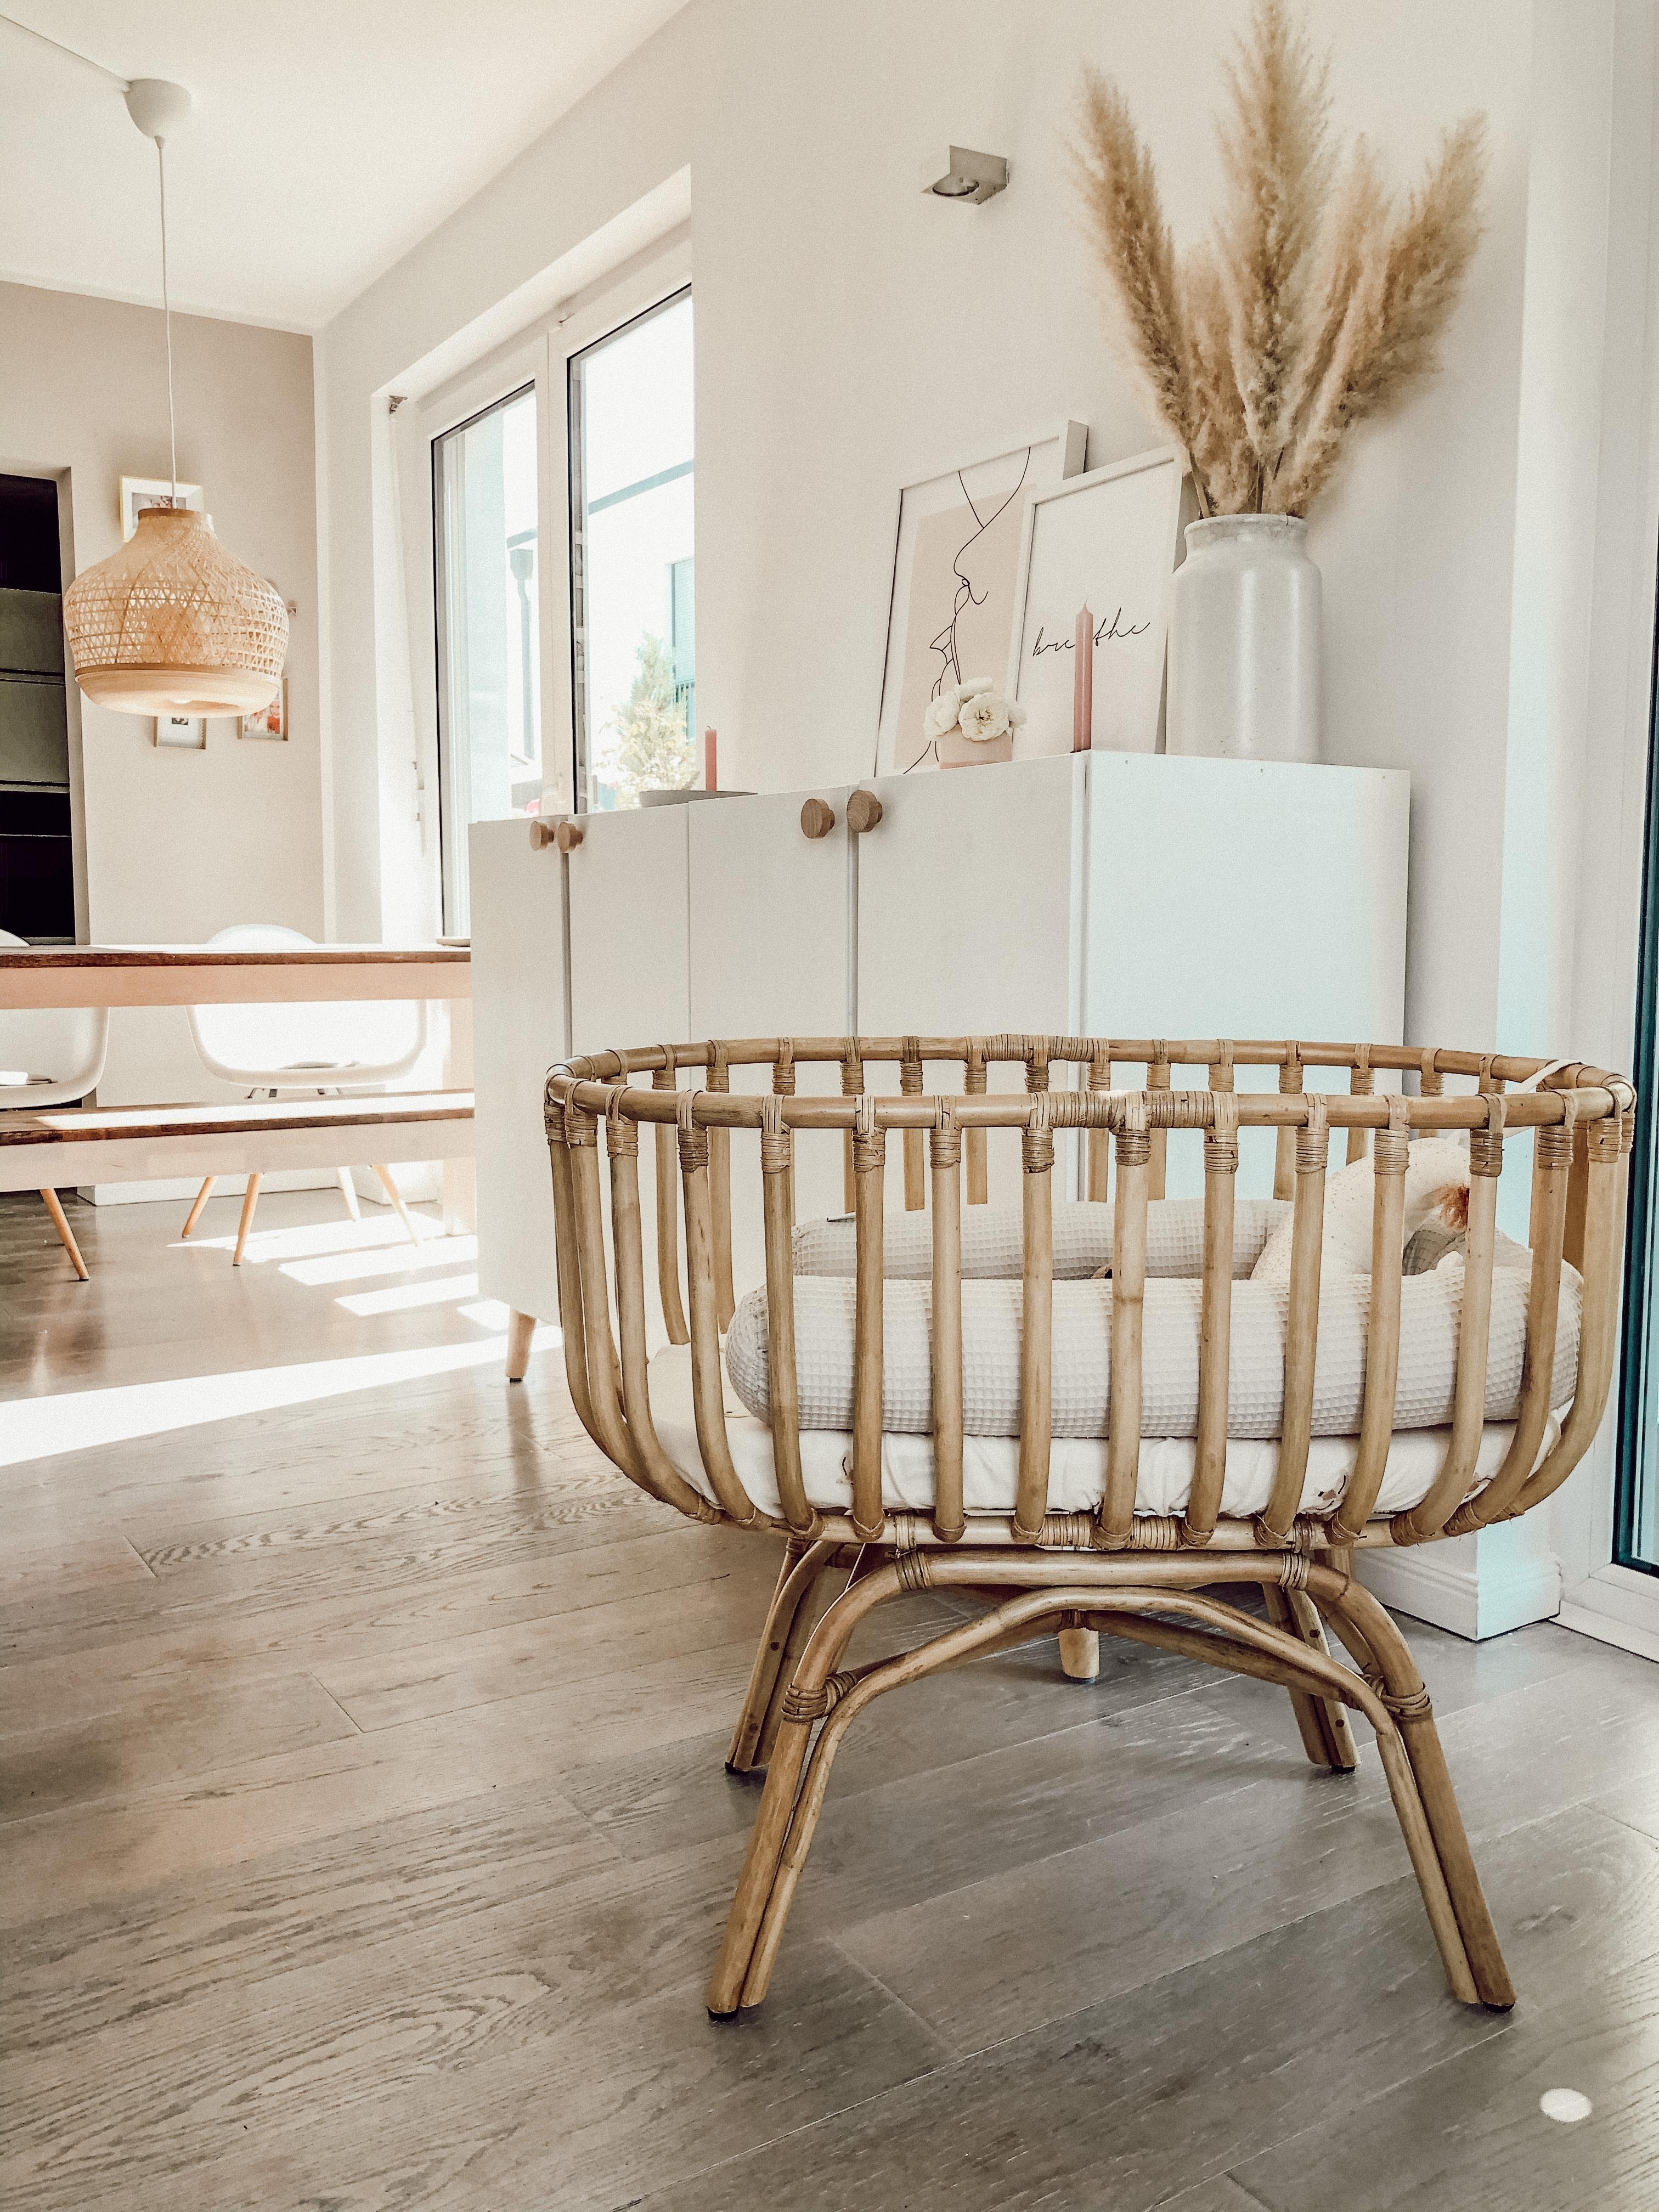 New in 🧡
#Ivar
#Babywiege
#livingroom